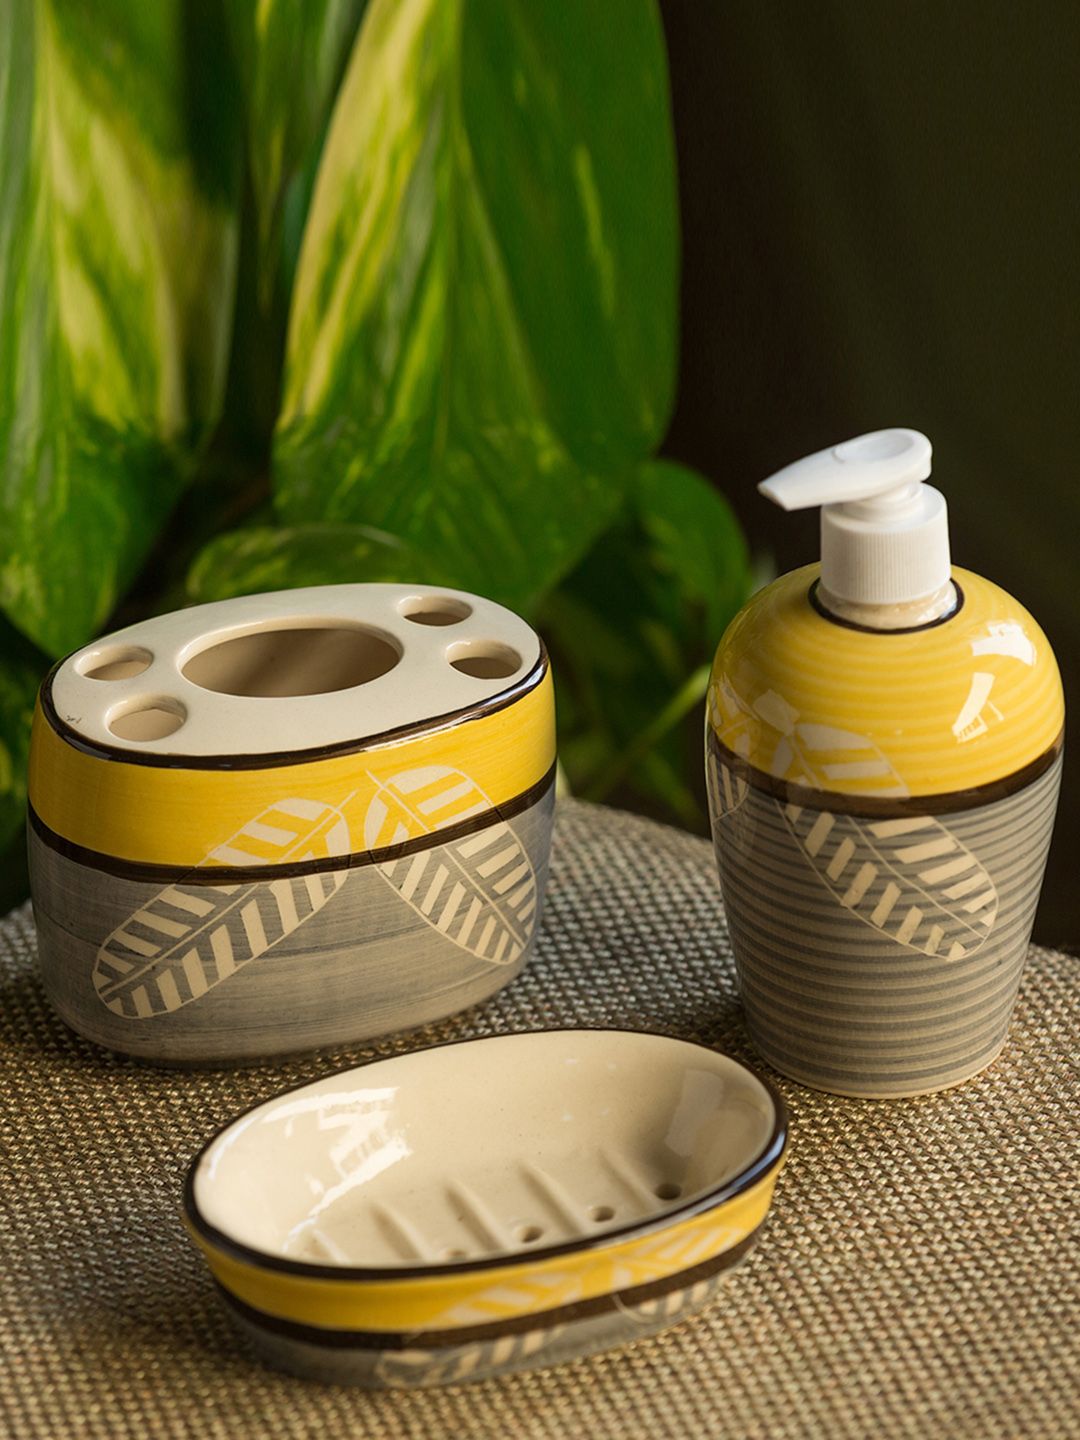 ExclusiveLane Set of 3 Grey & Yellow Printed Ceramic Bathroom Accessories Price in India